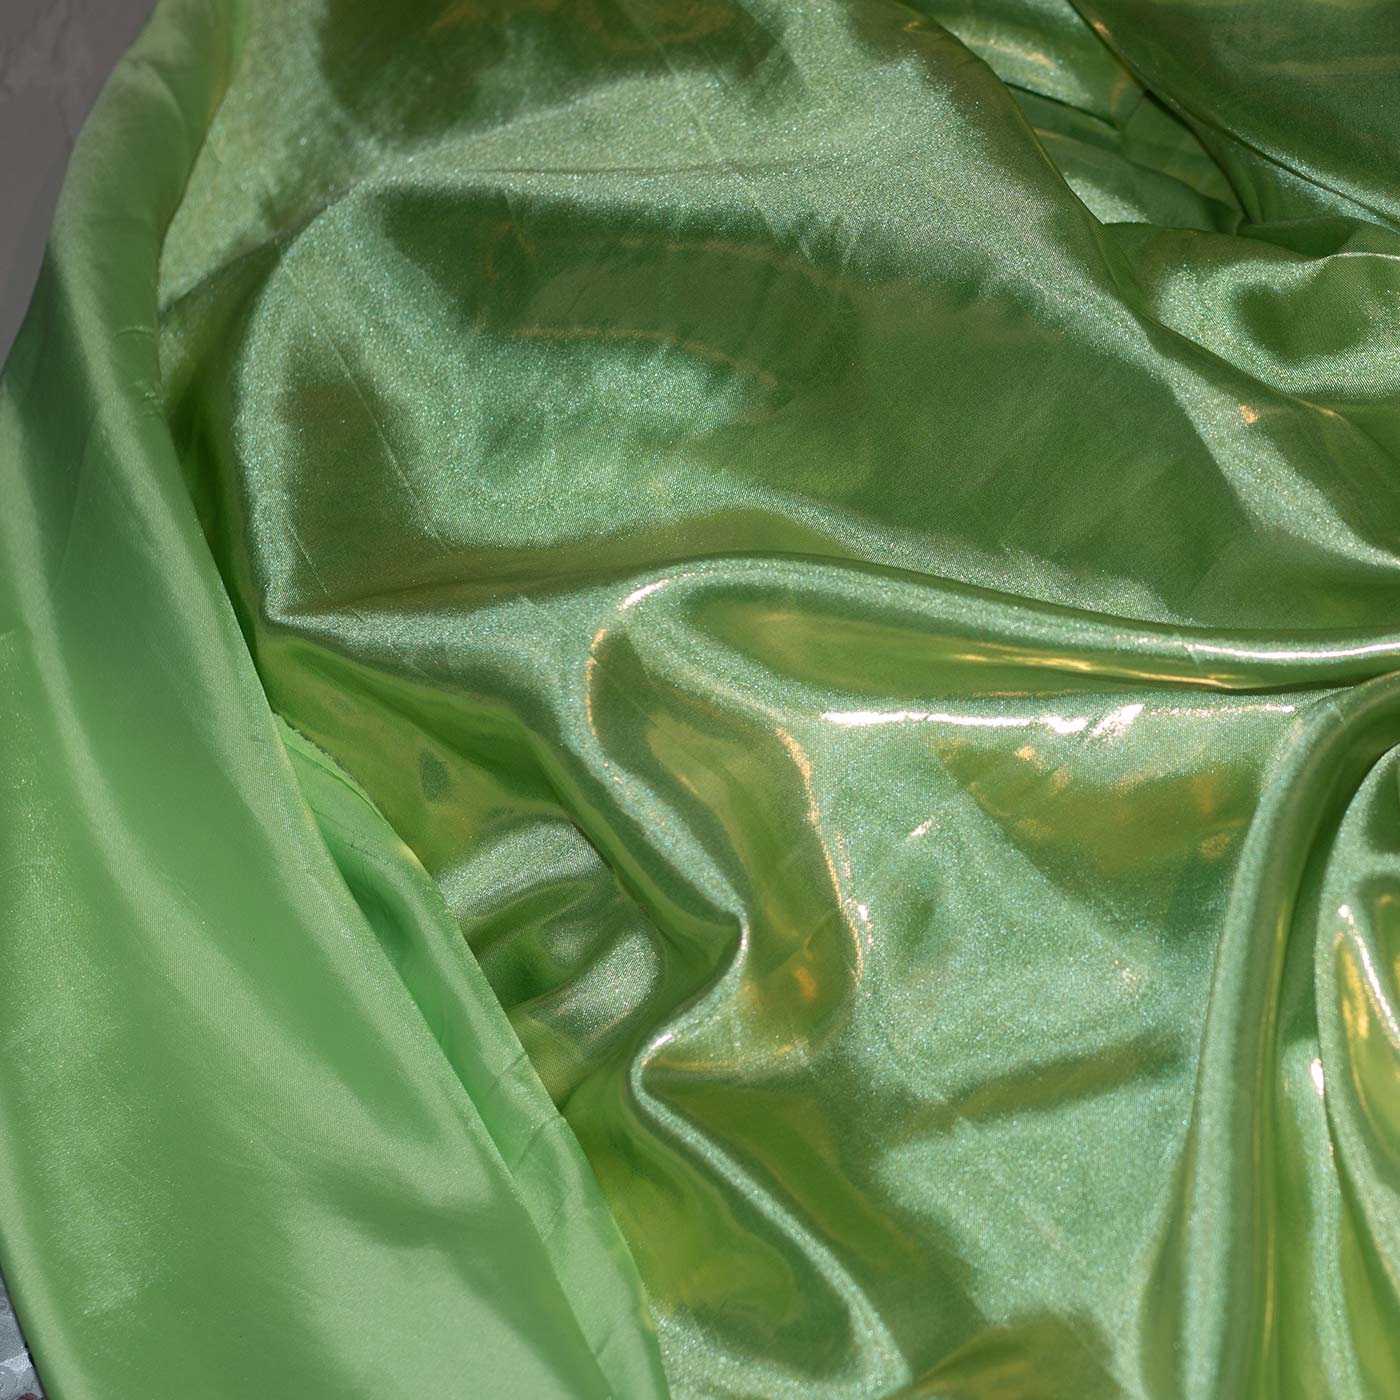 Green Metallic Foil Satin Fabric